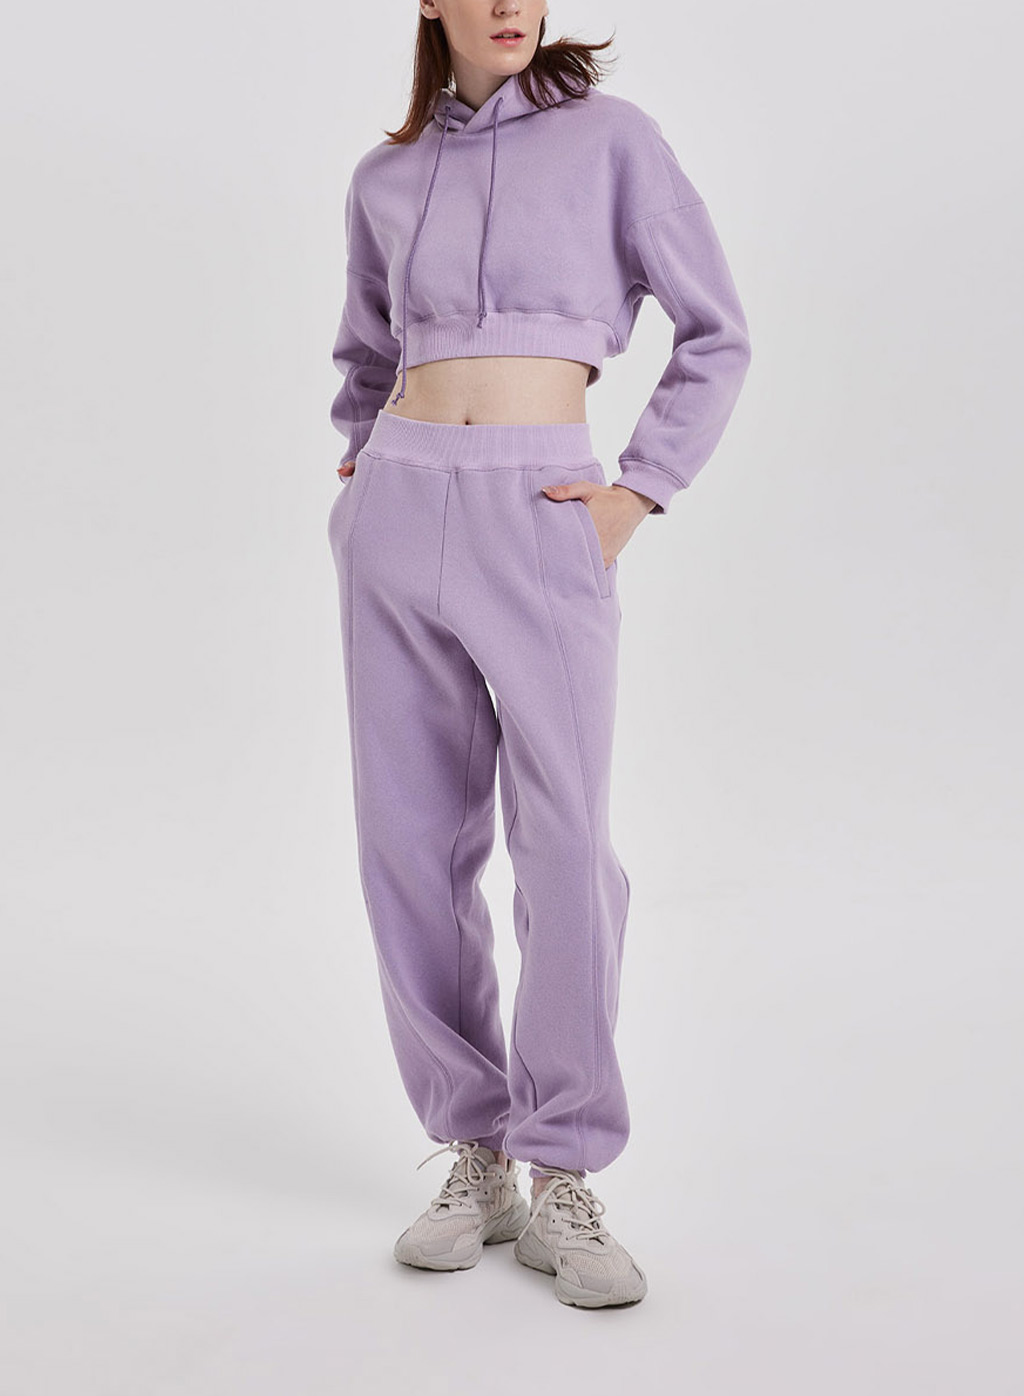 Shop Women's Matching Sets & 2-Piece Outfits Online | Nap Loungewear